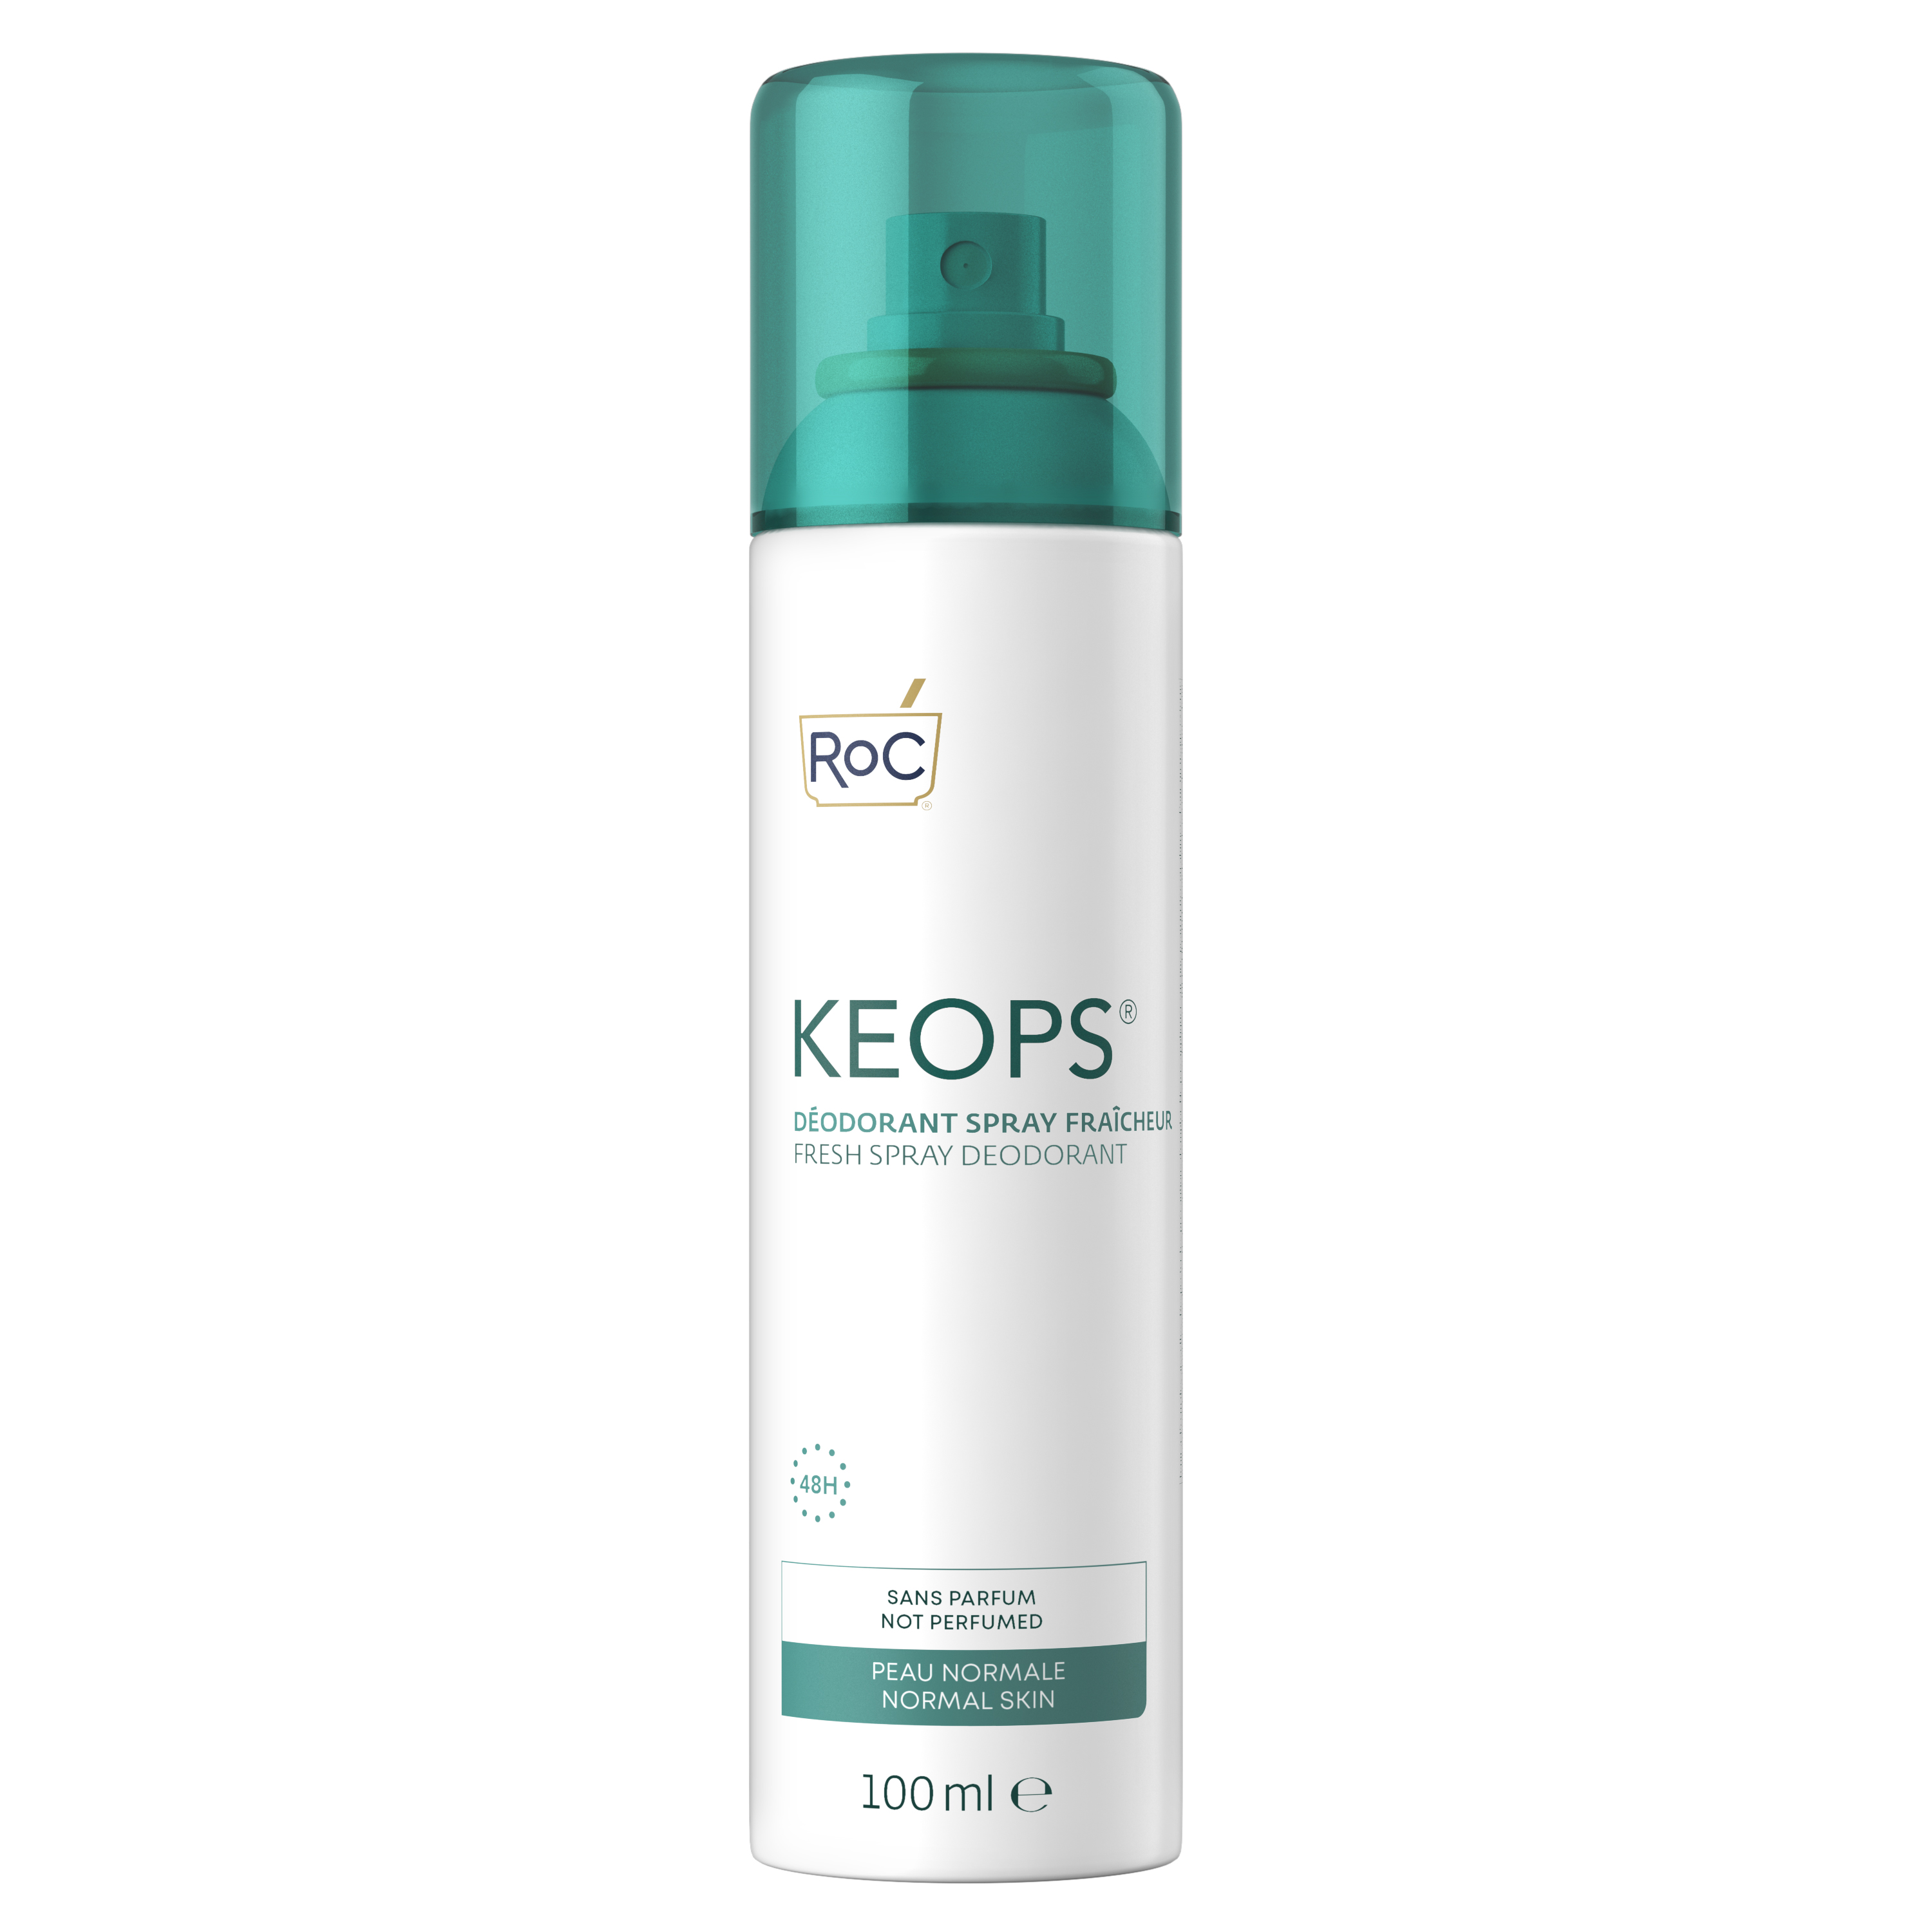 Deodorant spray Keops, 100 ml, ROC